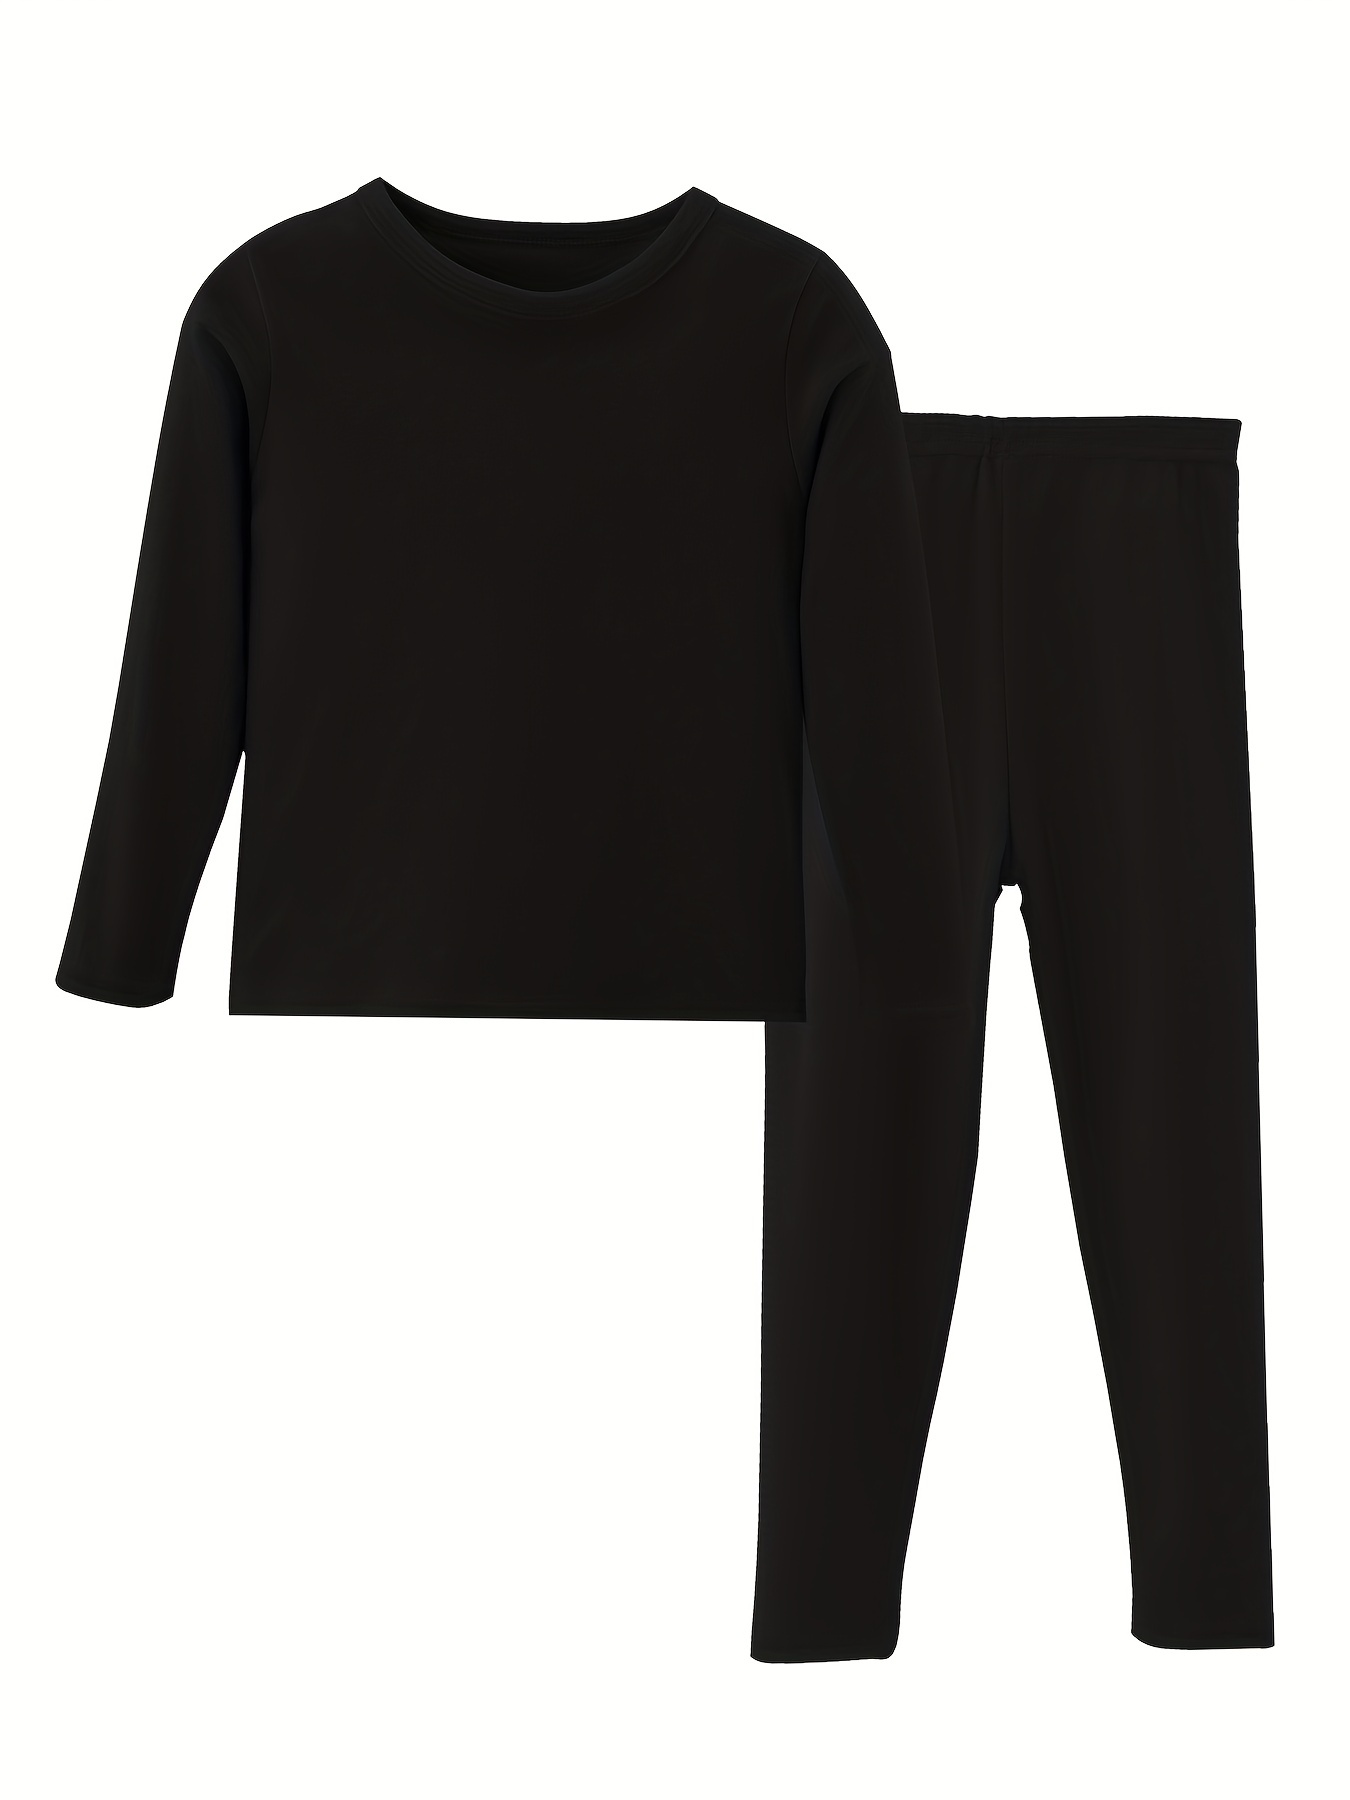 2PCS/Set Women Thermal Underwear T-Shirt Top+Long Pants Winter